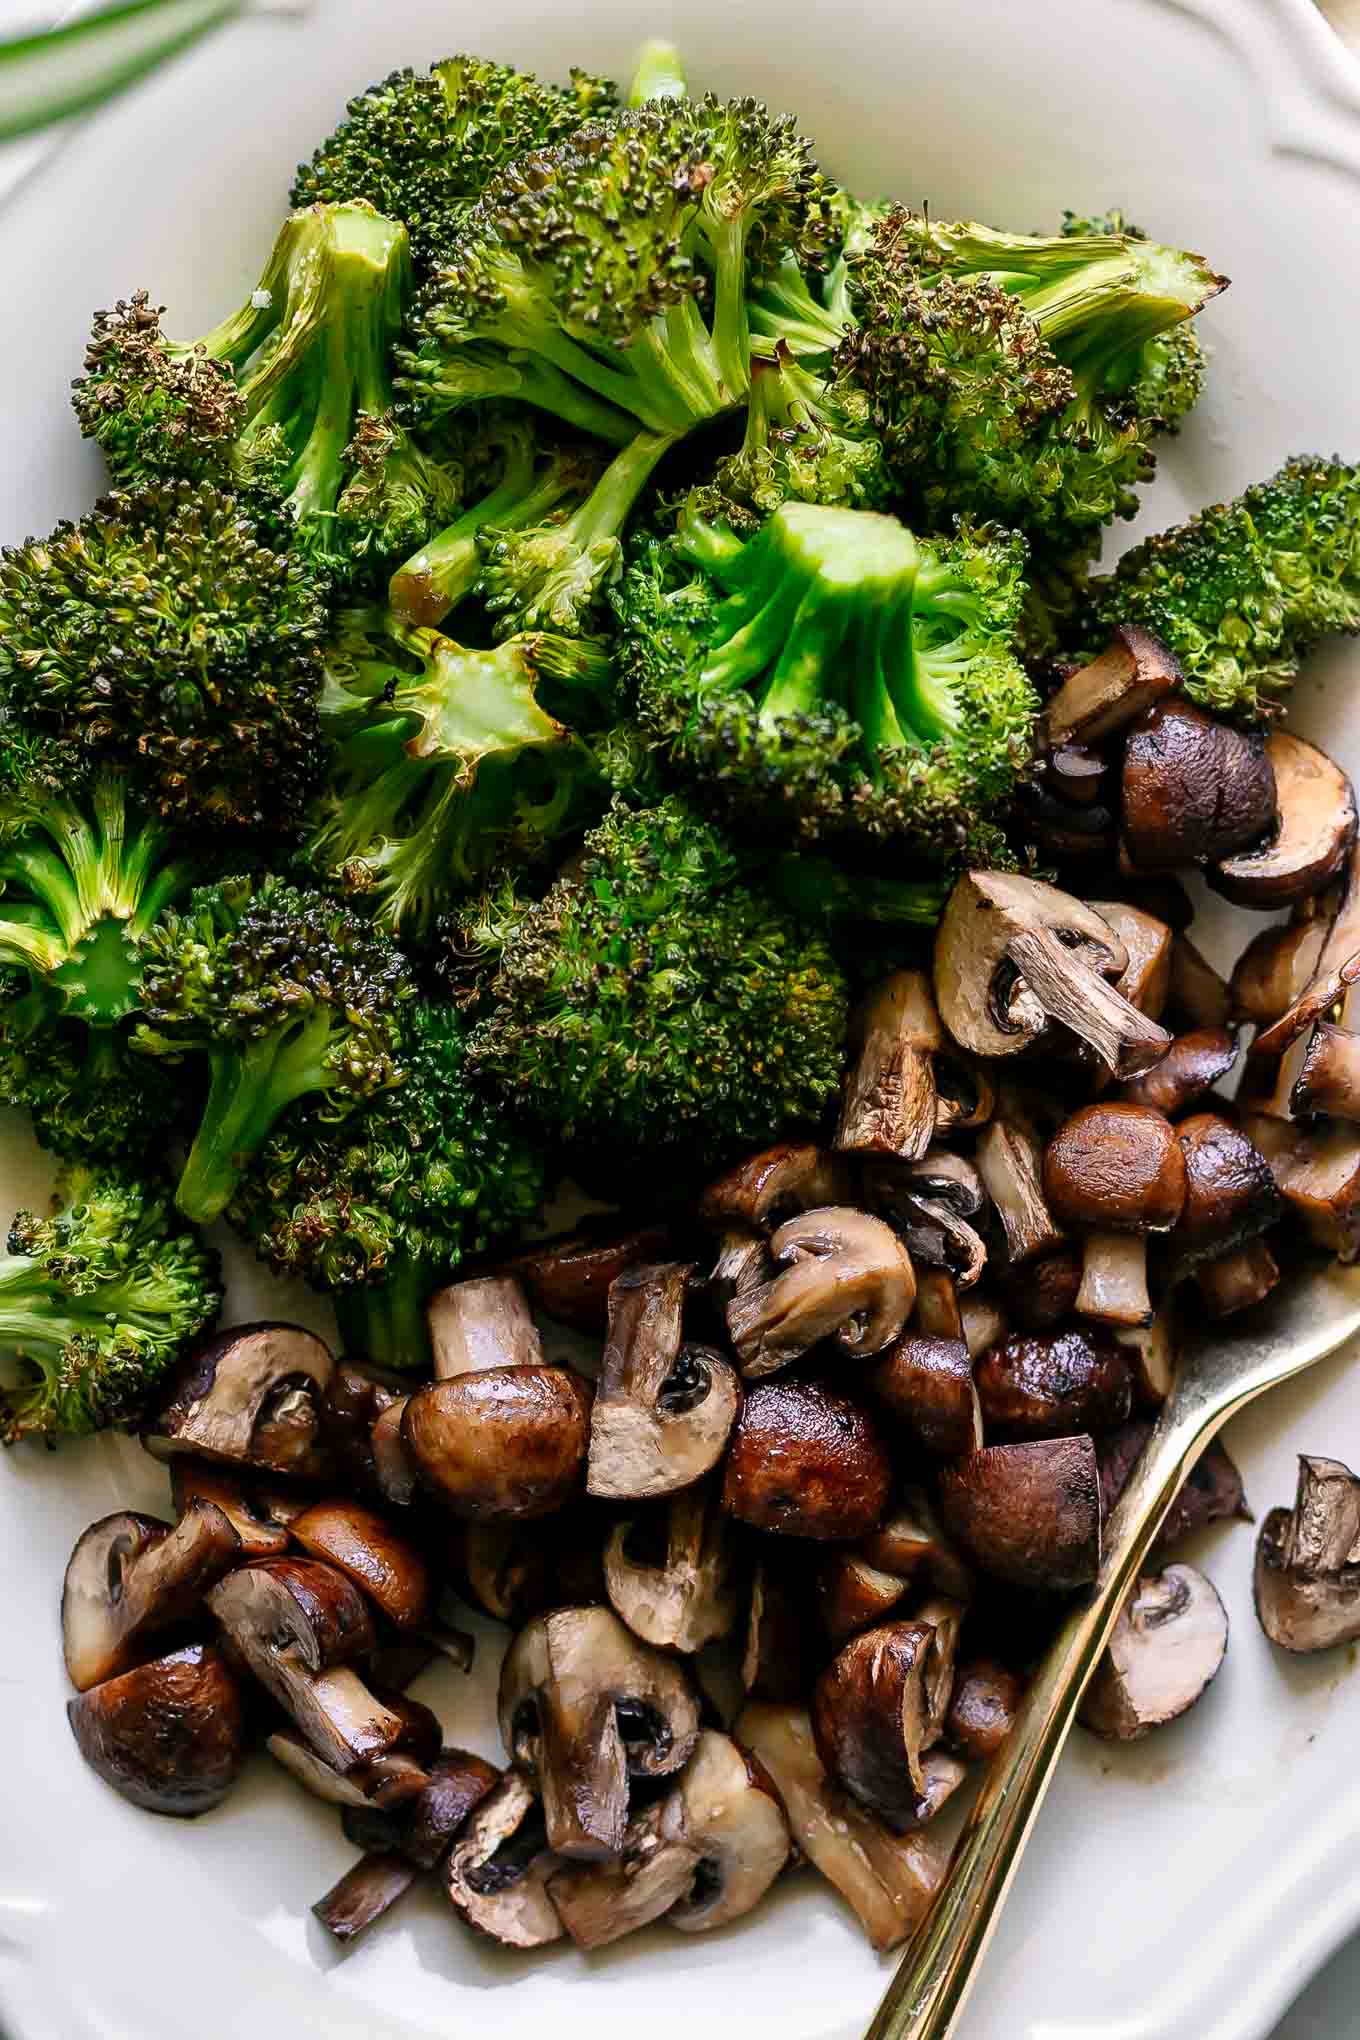 a close up photo of a roasted mushroom and broccoli side dish